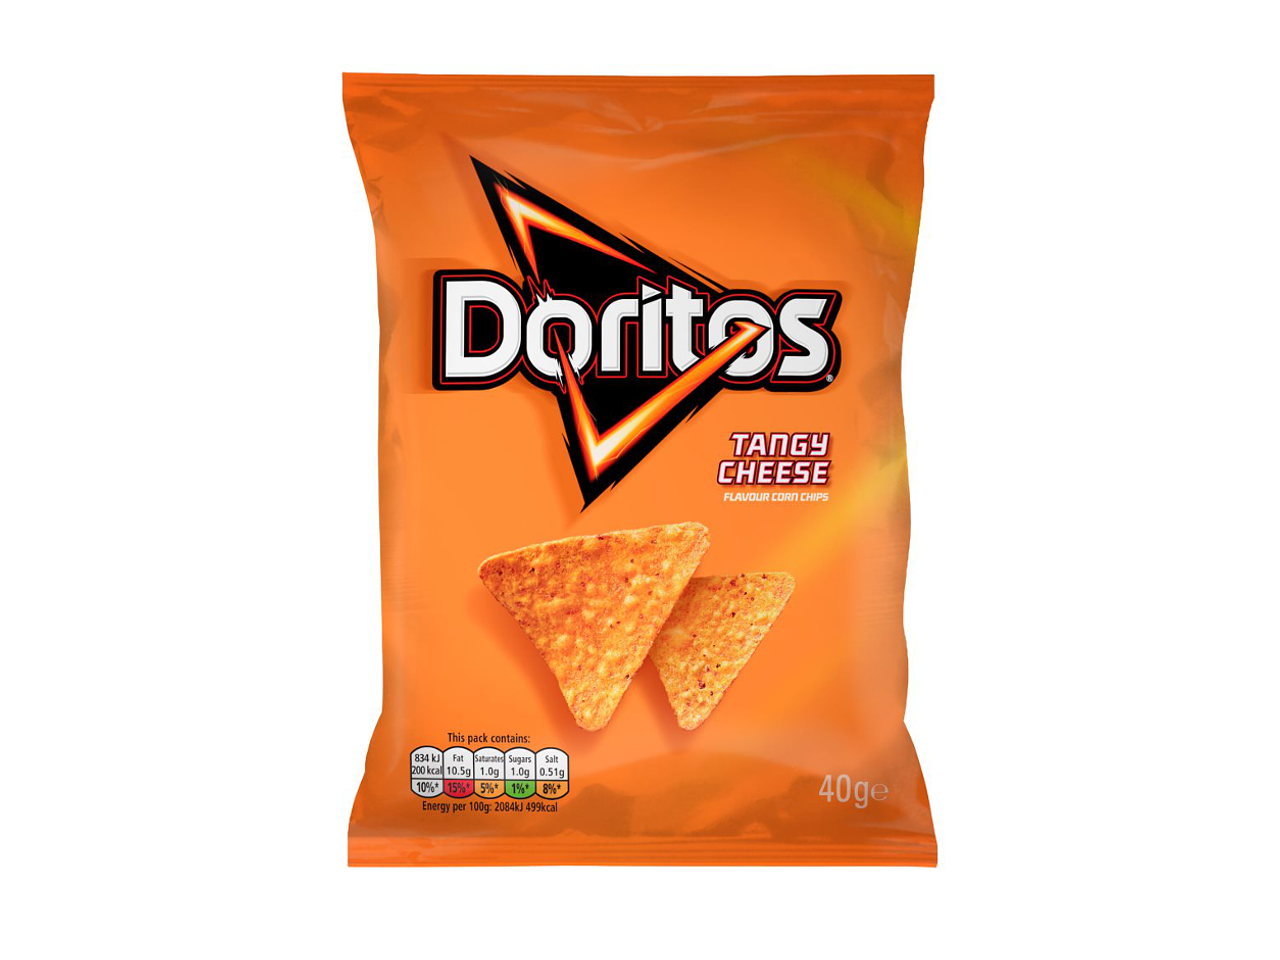 Doritos Tangy Cheese Corn Chips 40g Manufacturer - dorito yum yum yum roblox